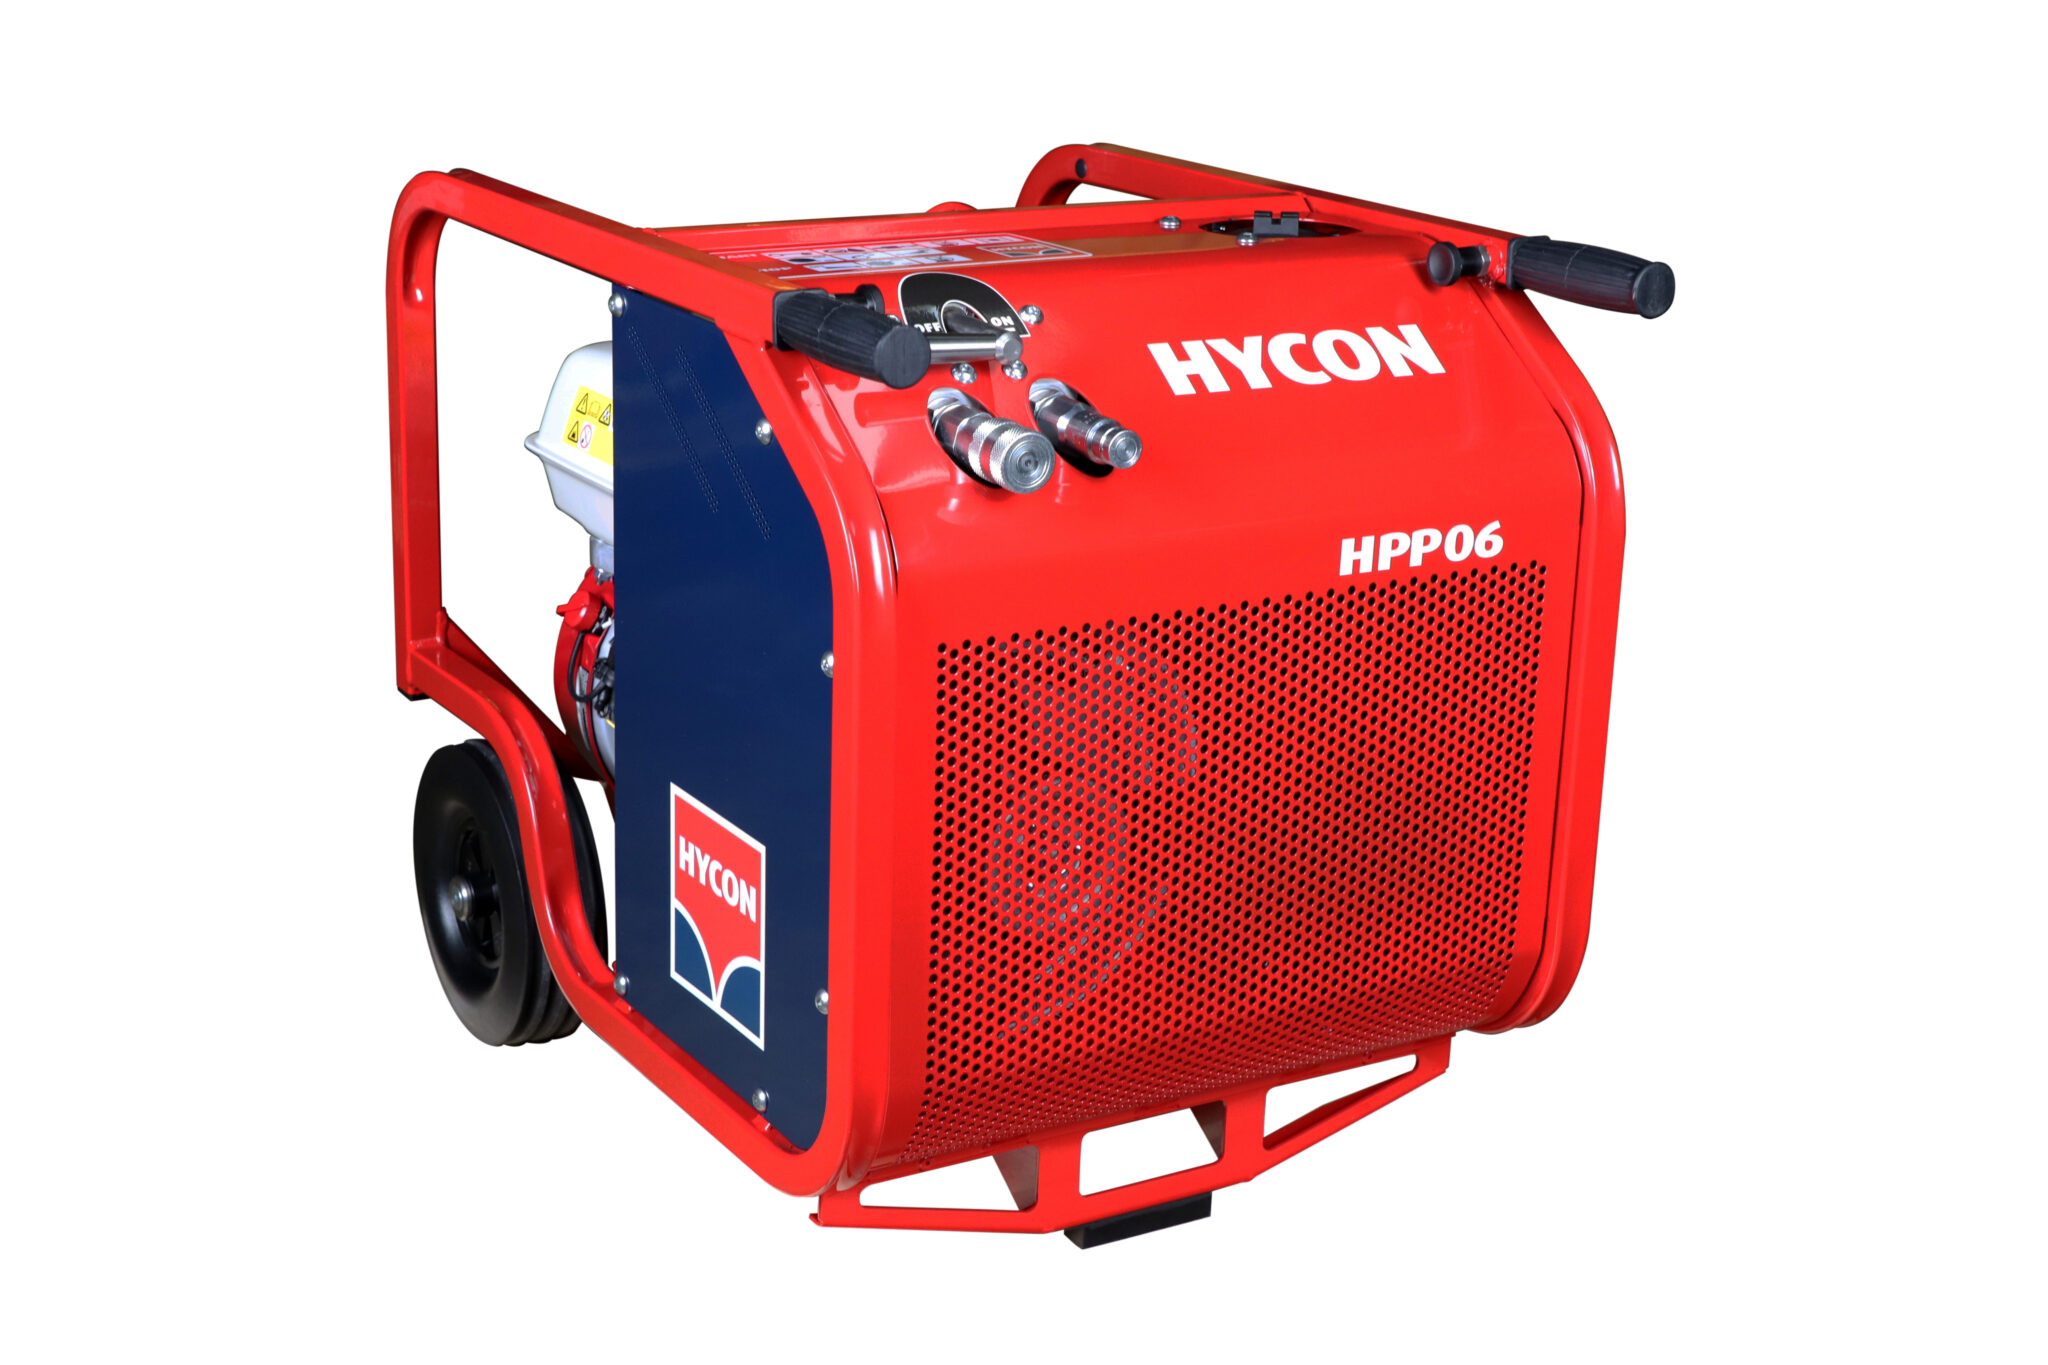 Hycon HPP06 Hydraulic Petrol Power Pack